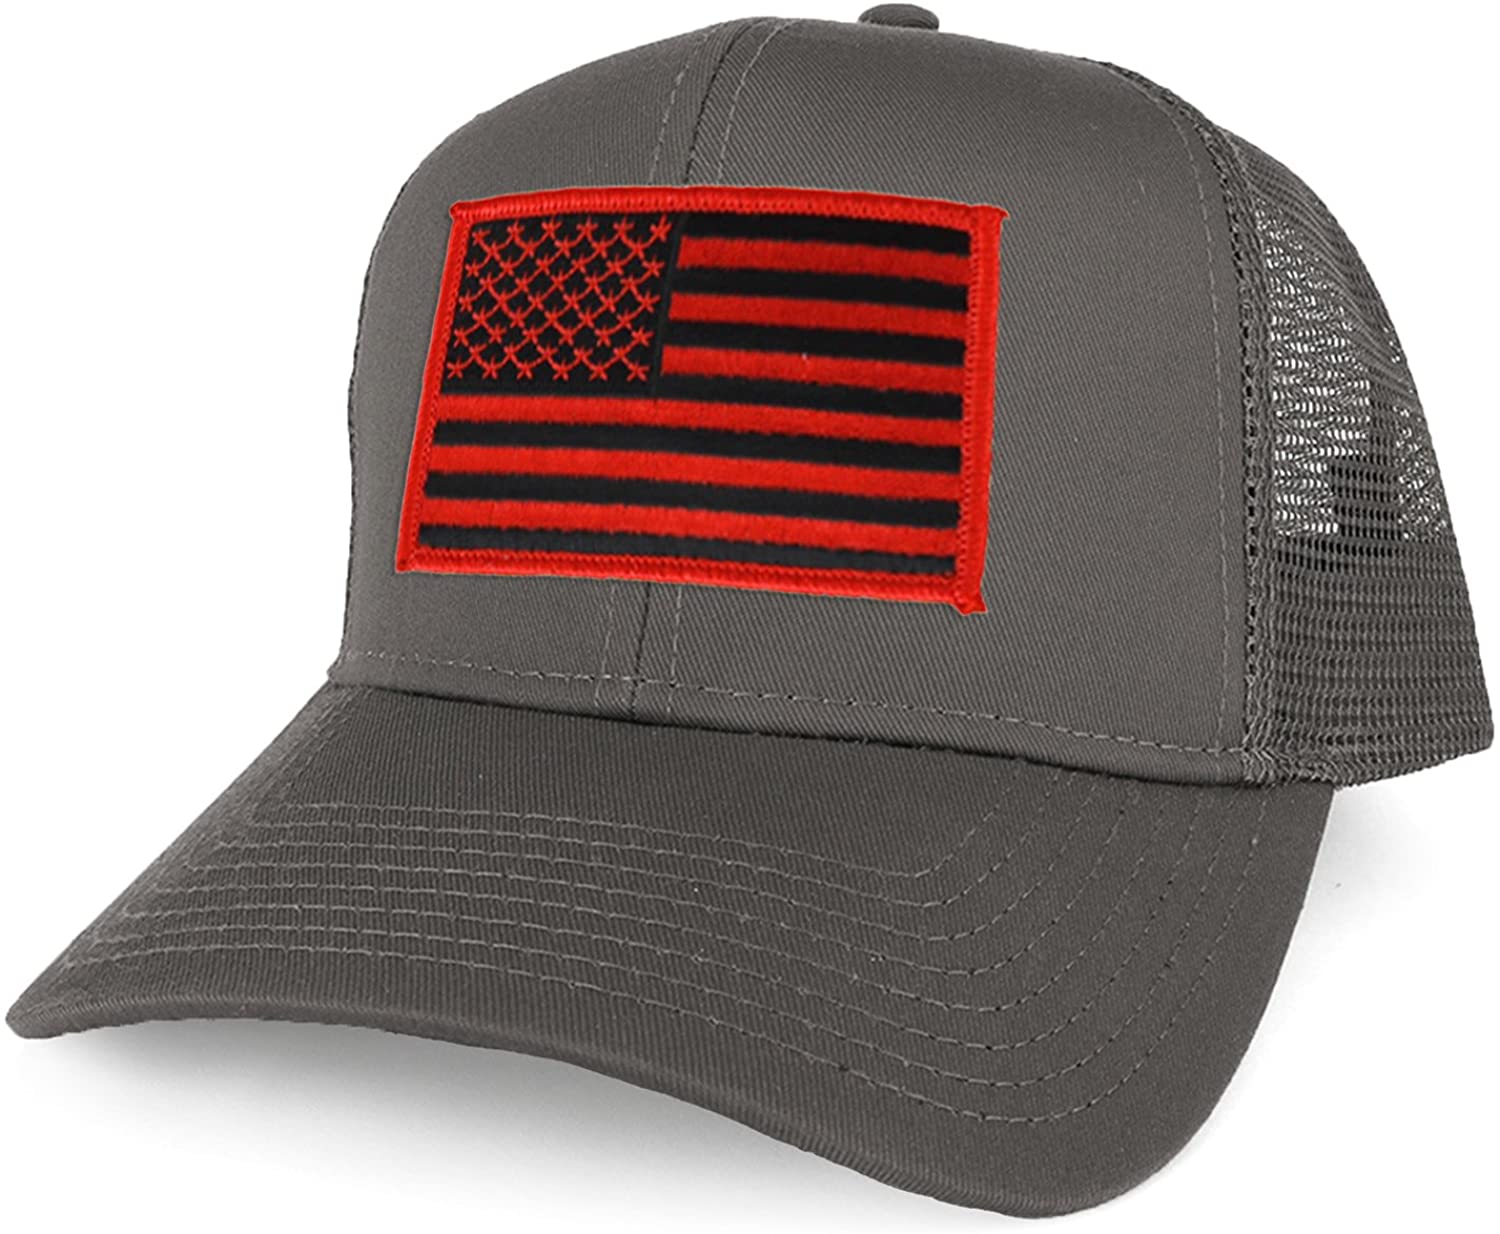 Armycrew XXL Oversize Black Red USA Flag Patch Mesh Back Trucker Baseball Cap - Black